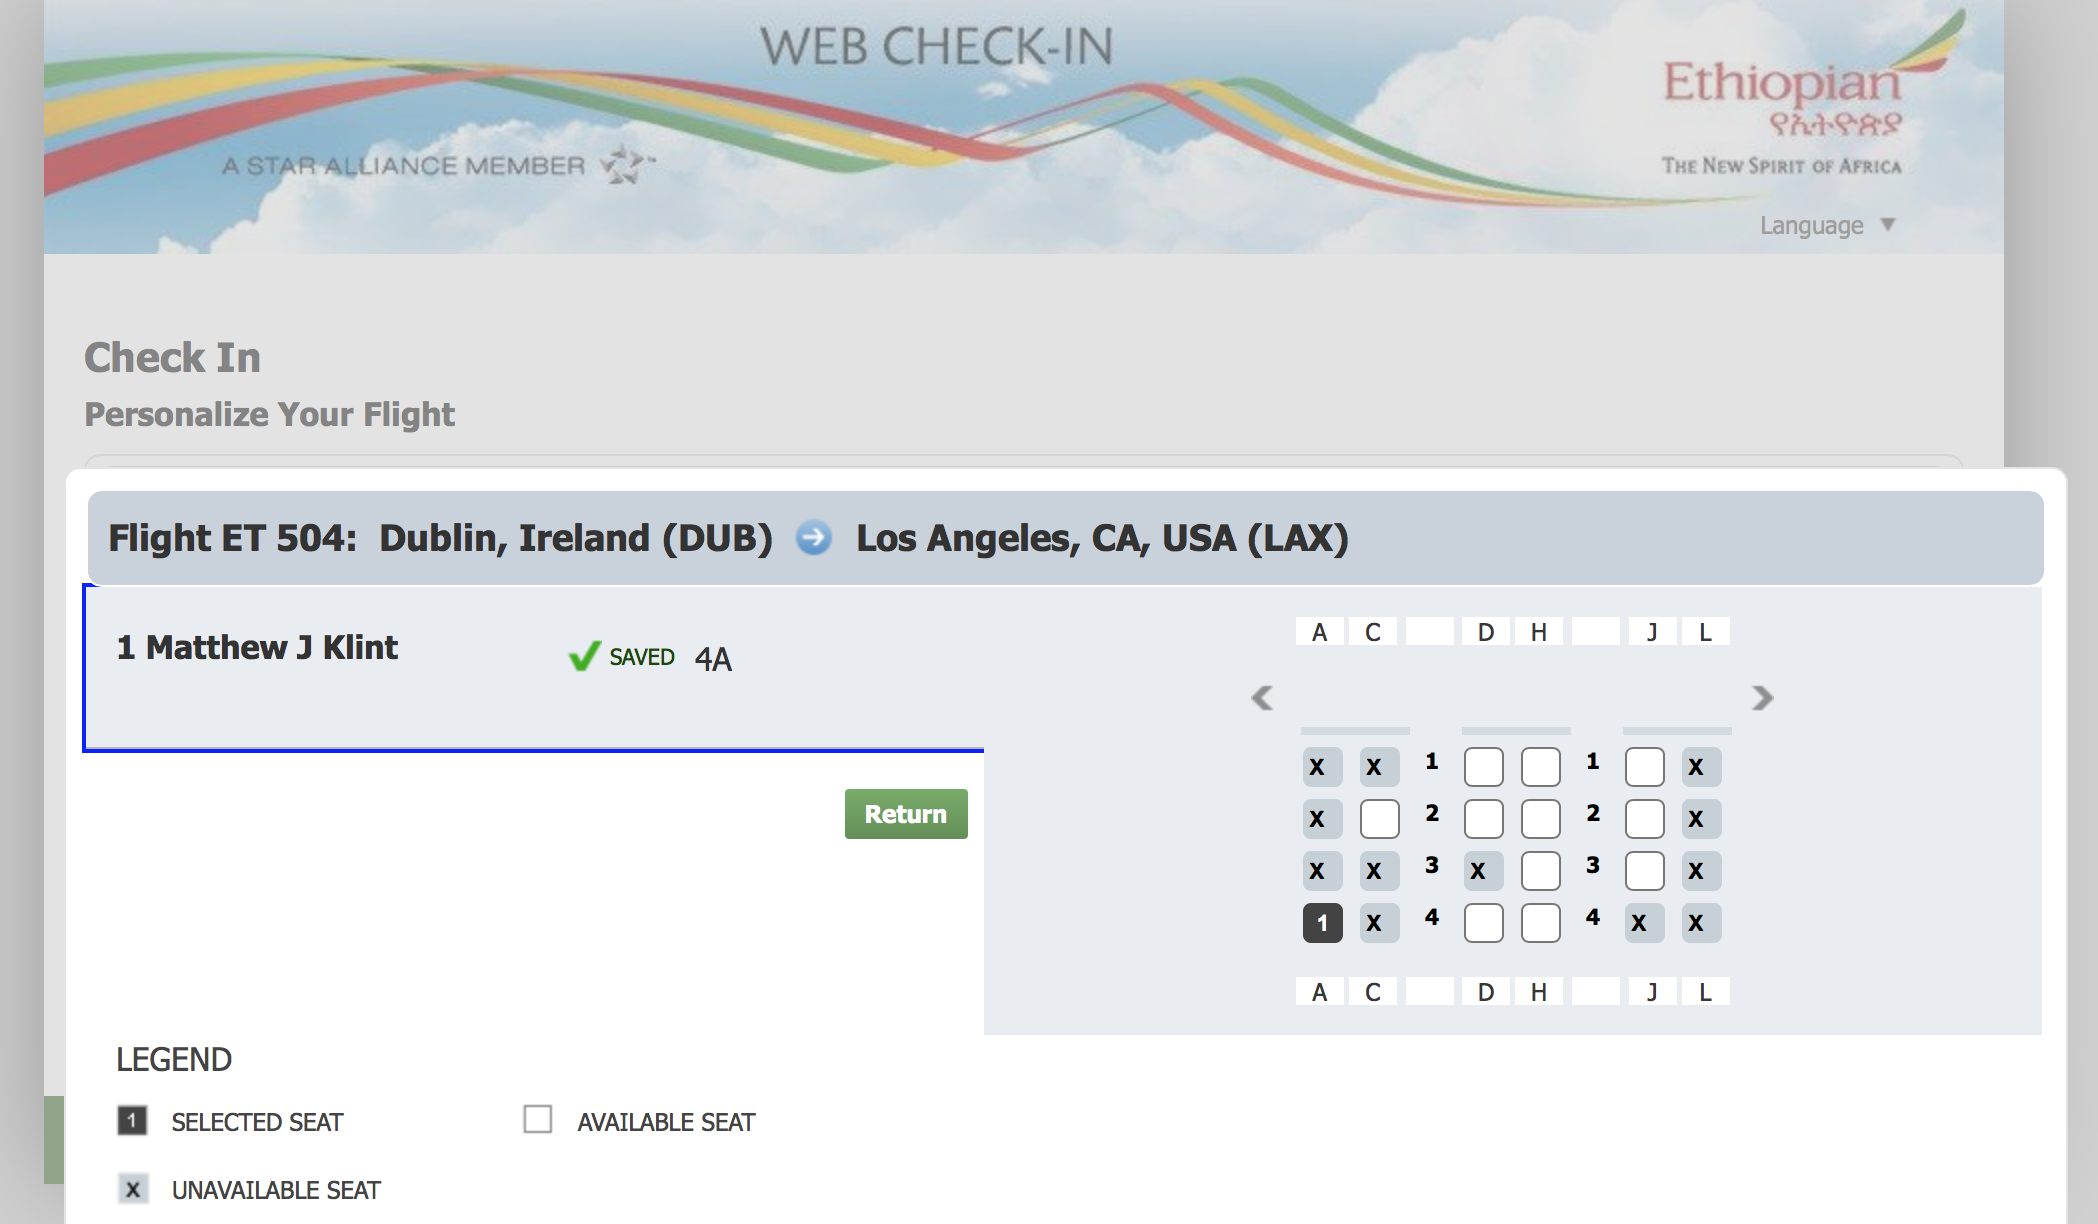 a screenshot of a web check-in